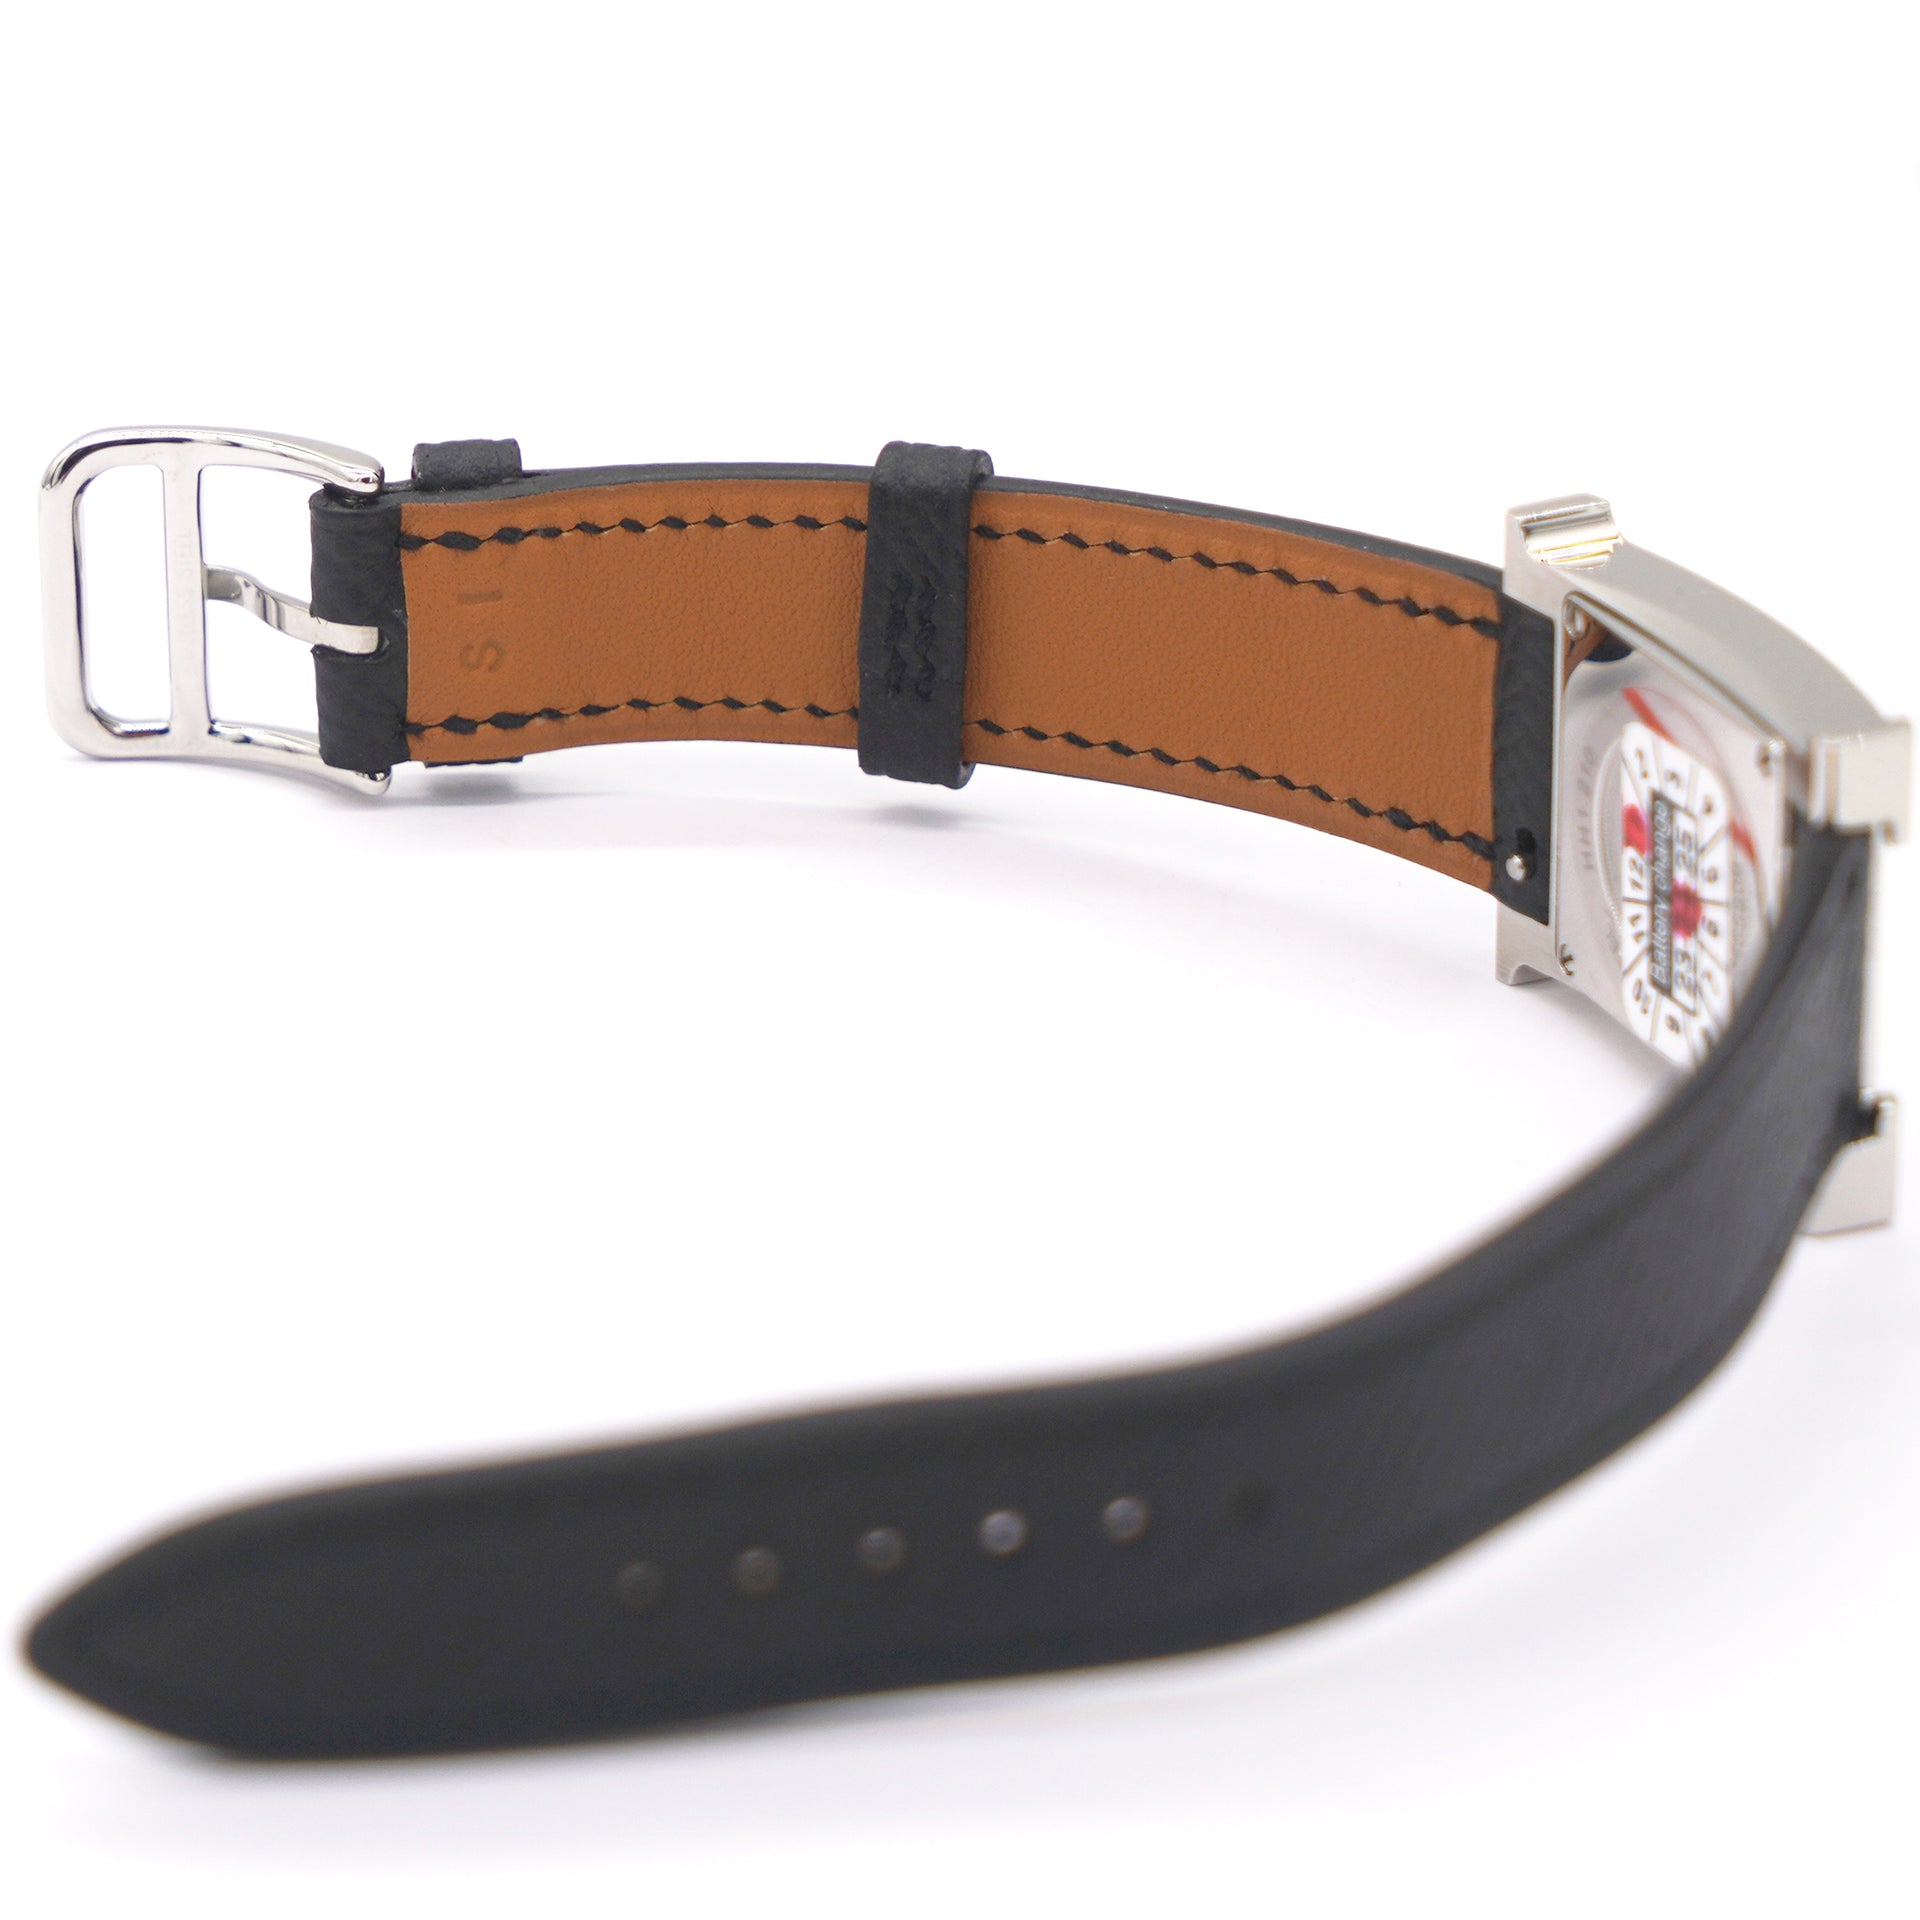 Heure H Watch, Small Model, 25 mm - Hermès